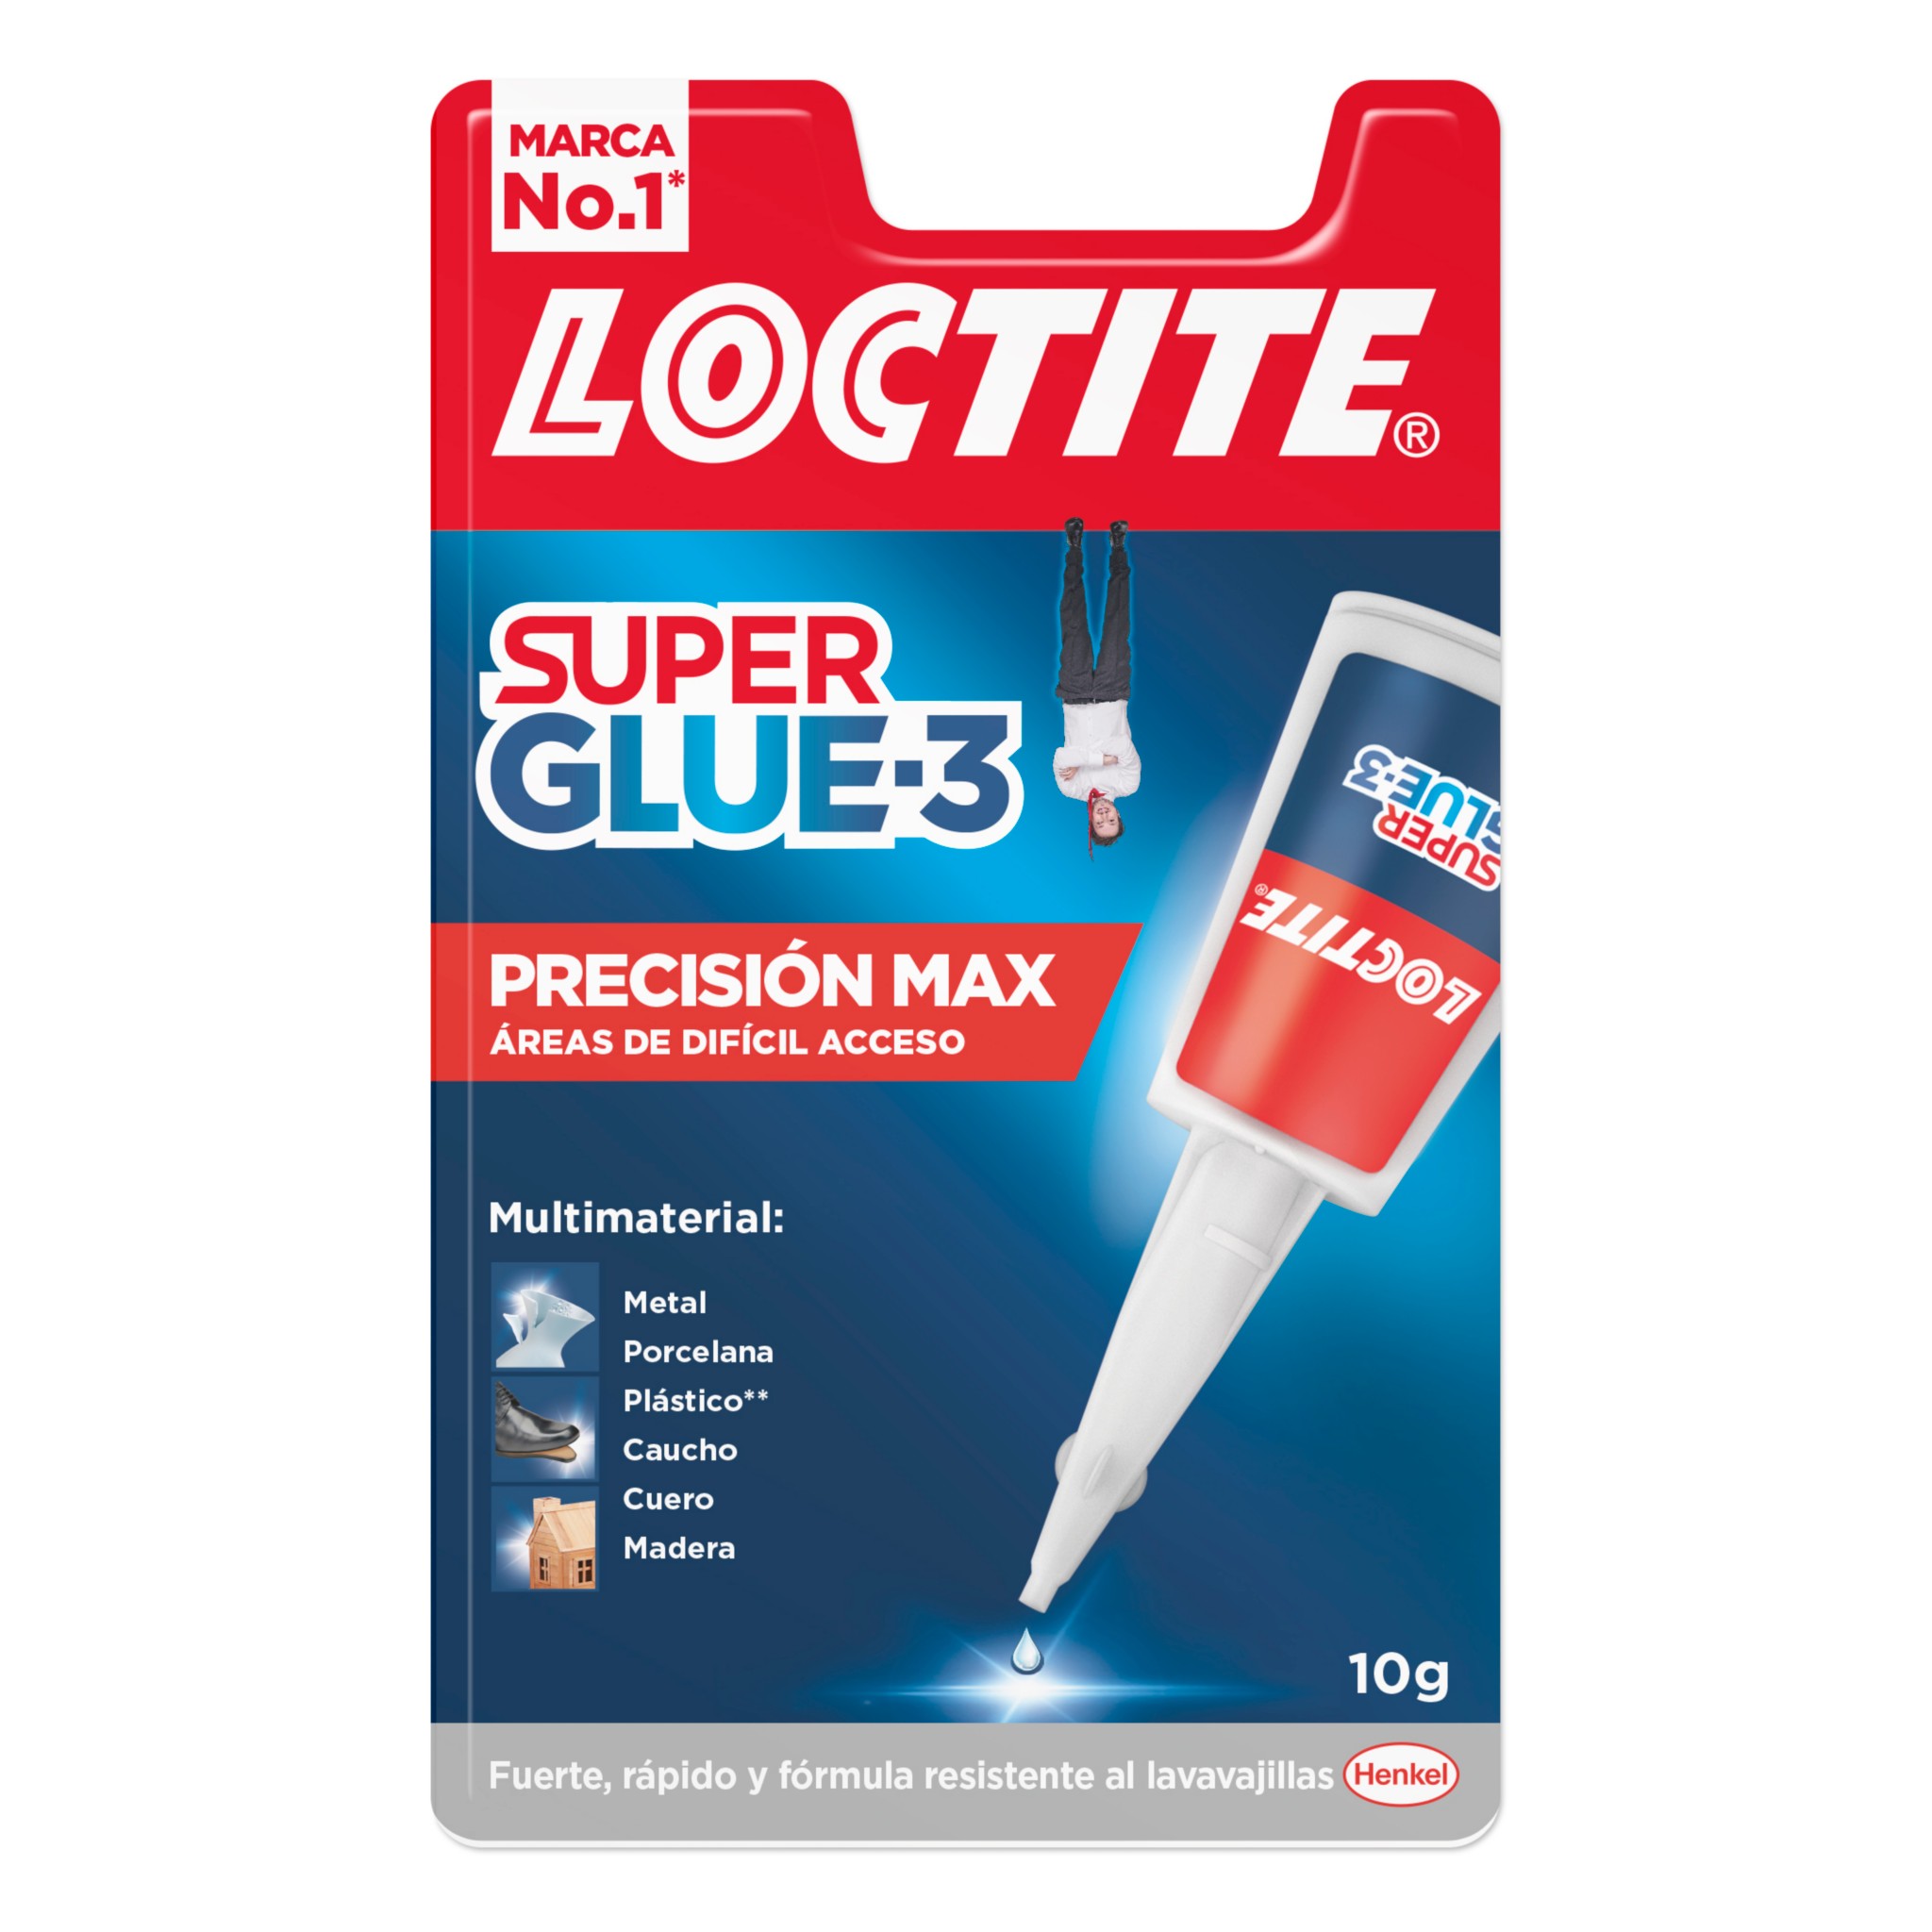 Alacena asignar garrapata Super Glue-3 Líquido Precisión Max